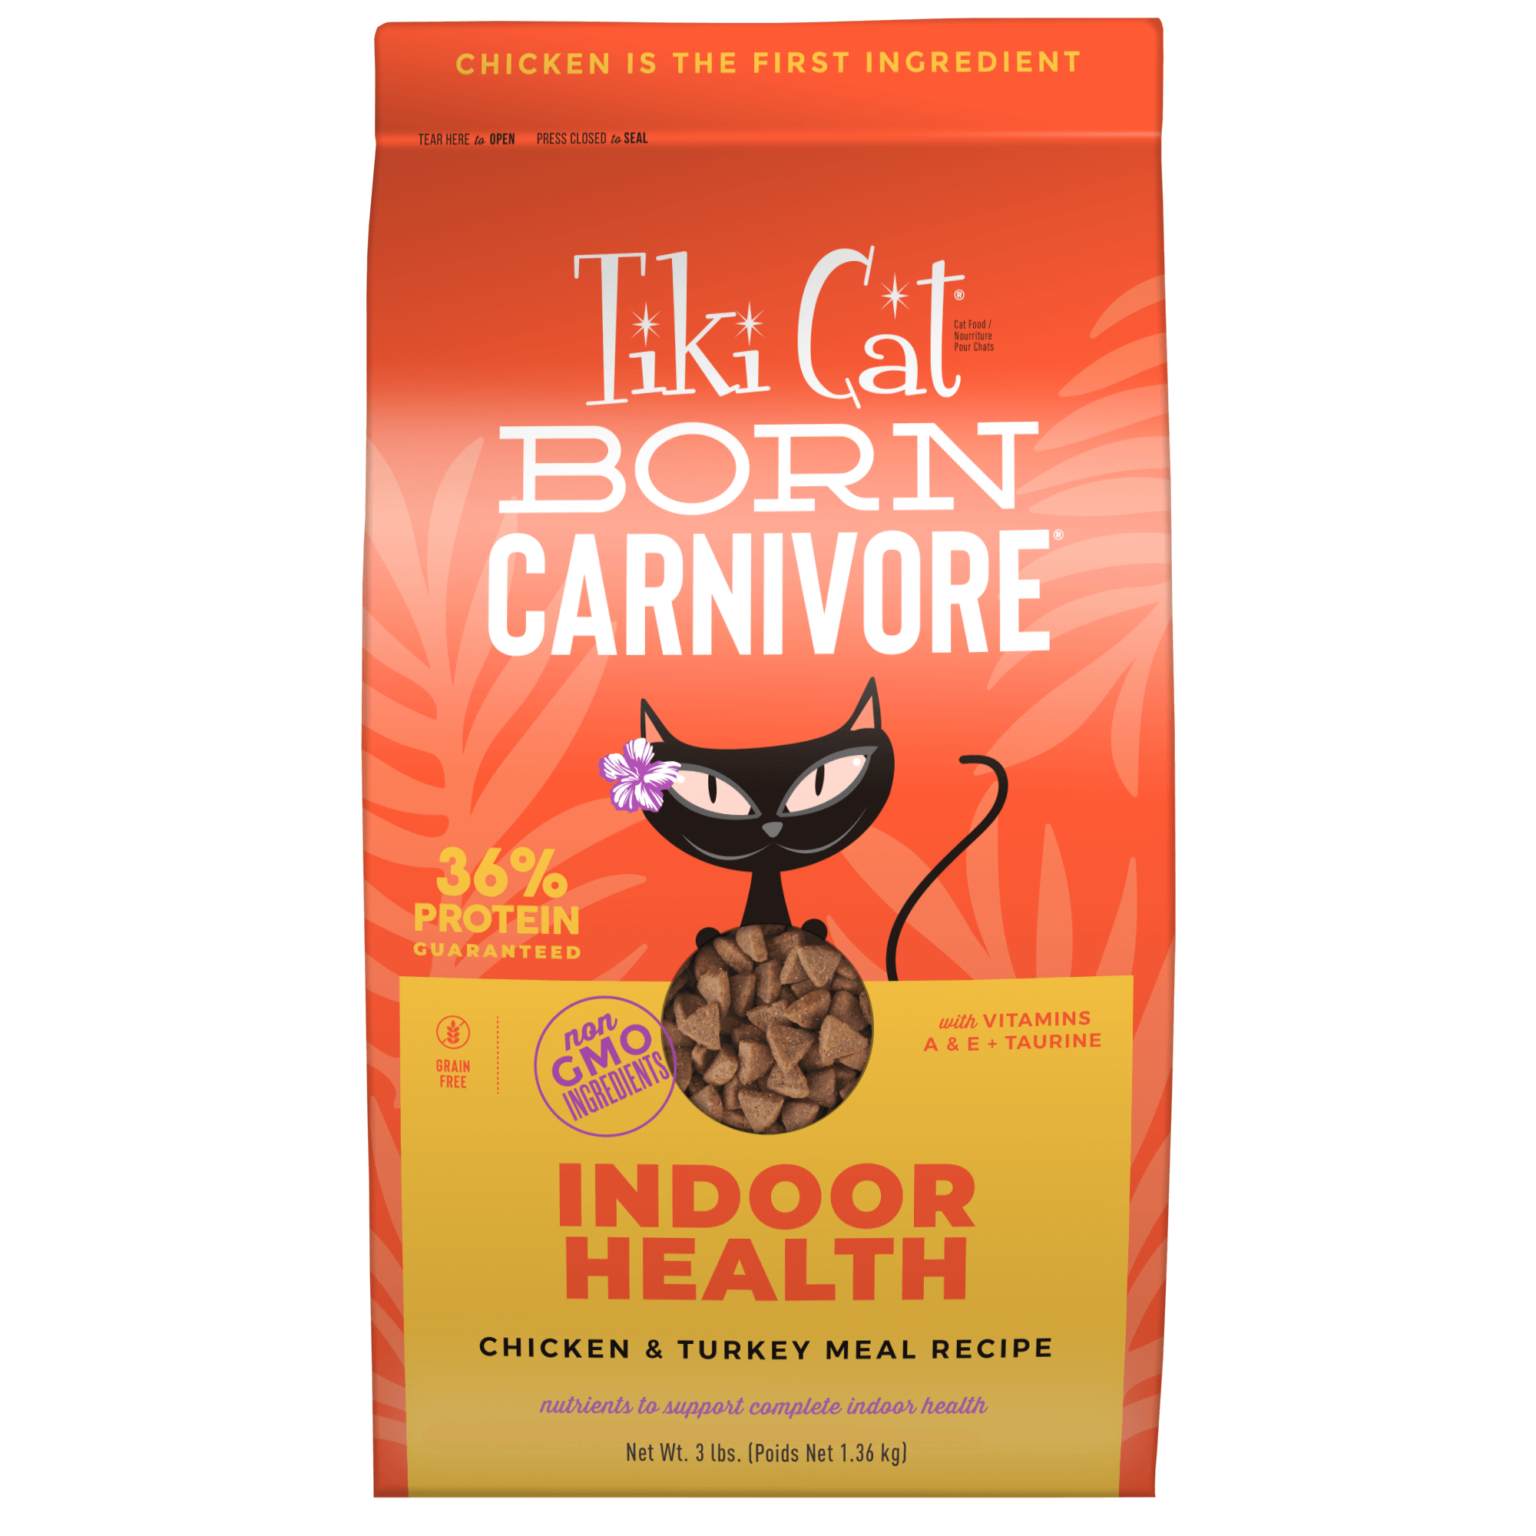 Tiki Cat - Born Carnivore - Indoor Health: Chicken & Turkey Meal Recipe (For Cats)